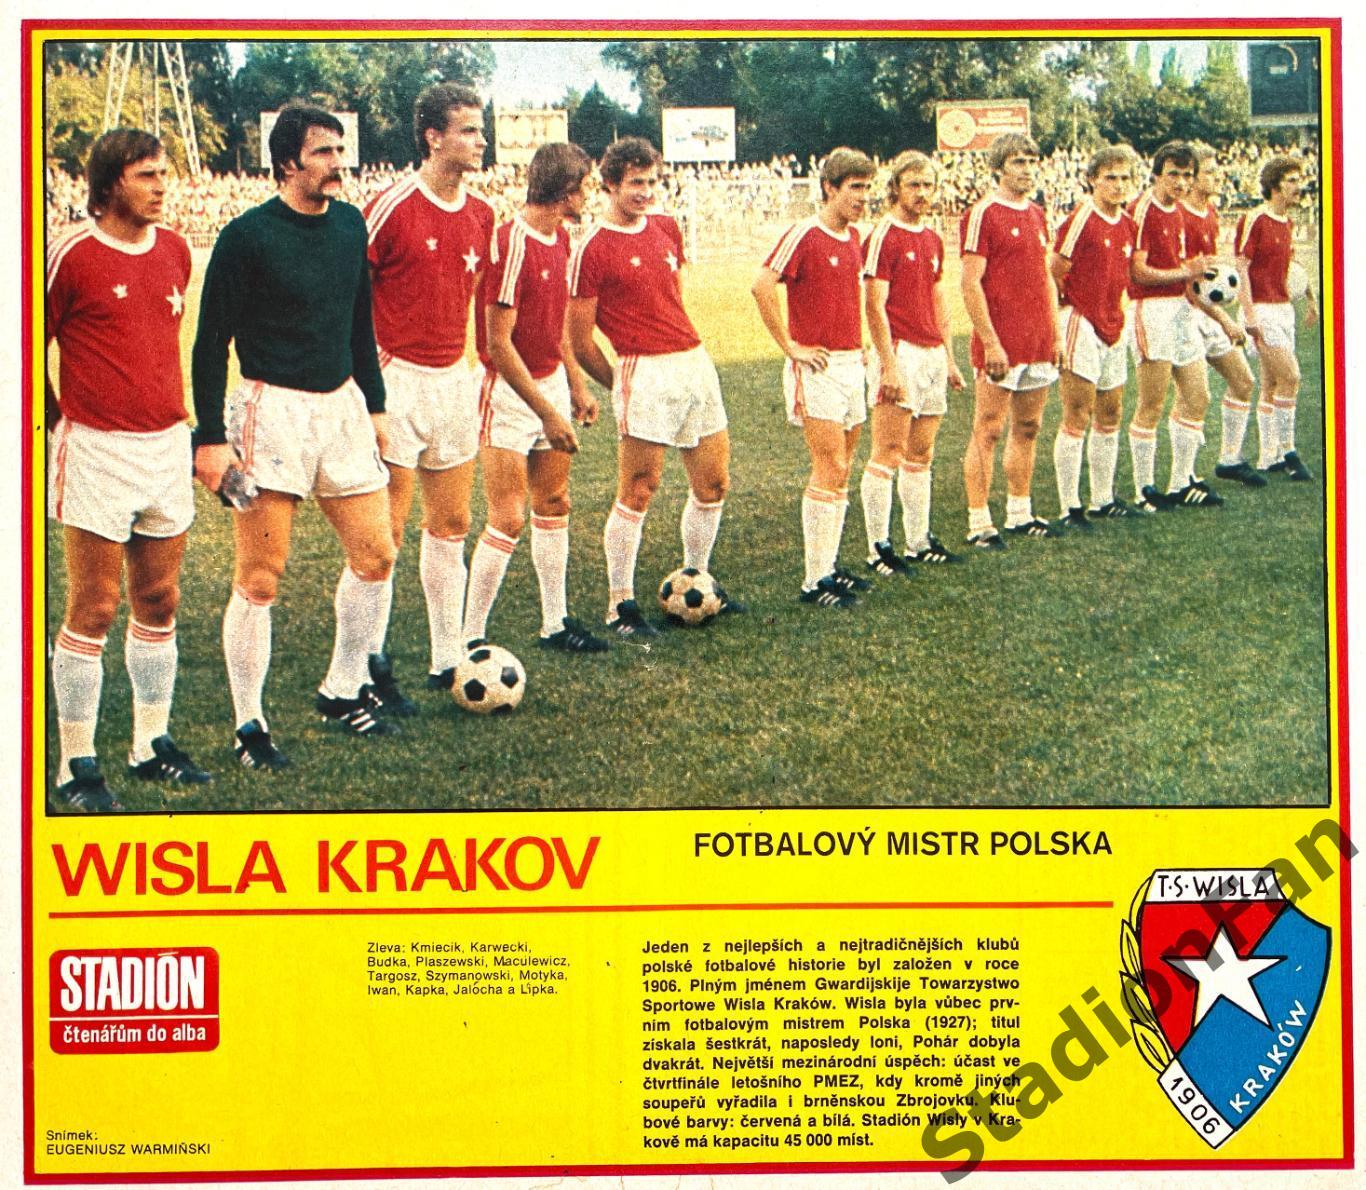 Постер из журнала Stadion (Стадион) - Wisla Krakov, 1979.